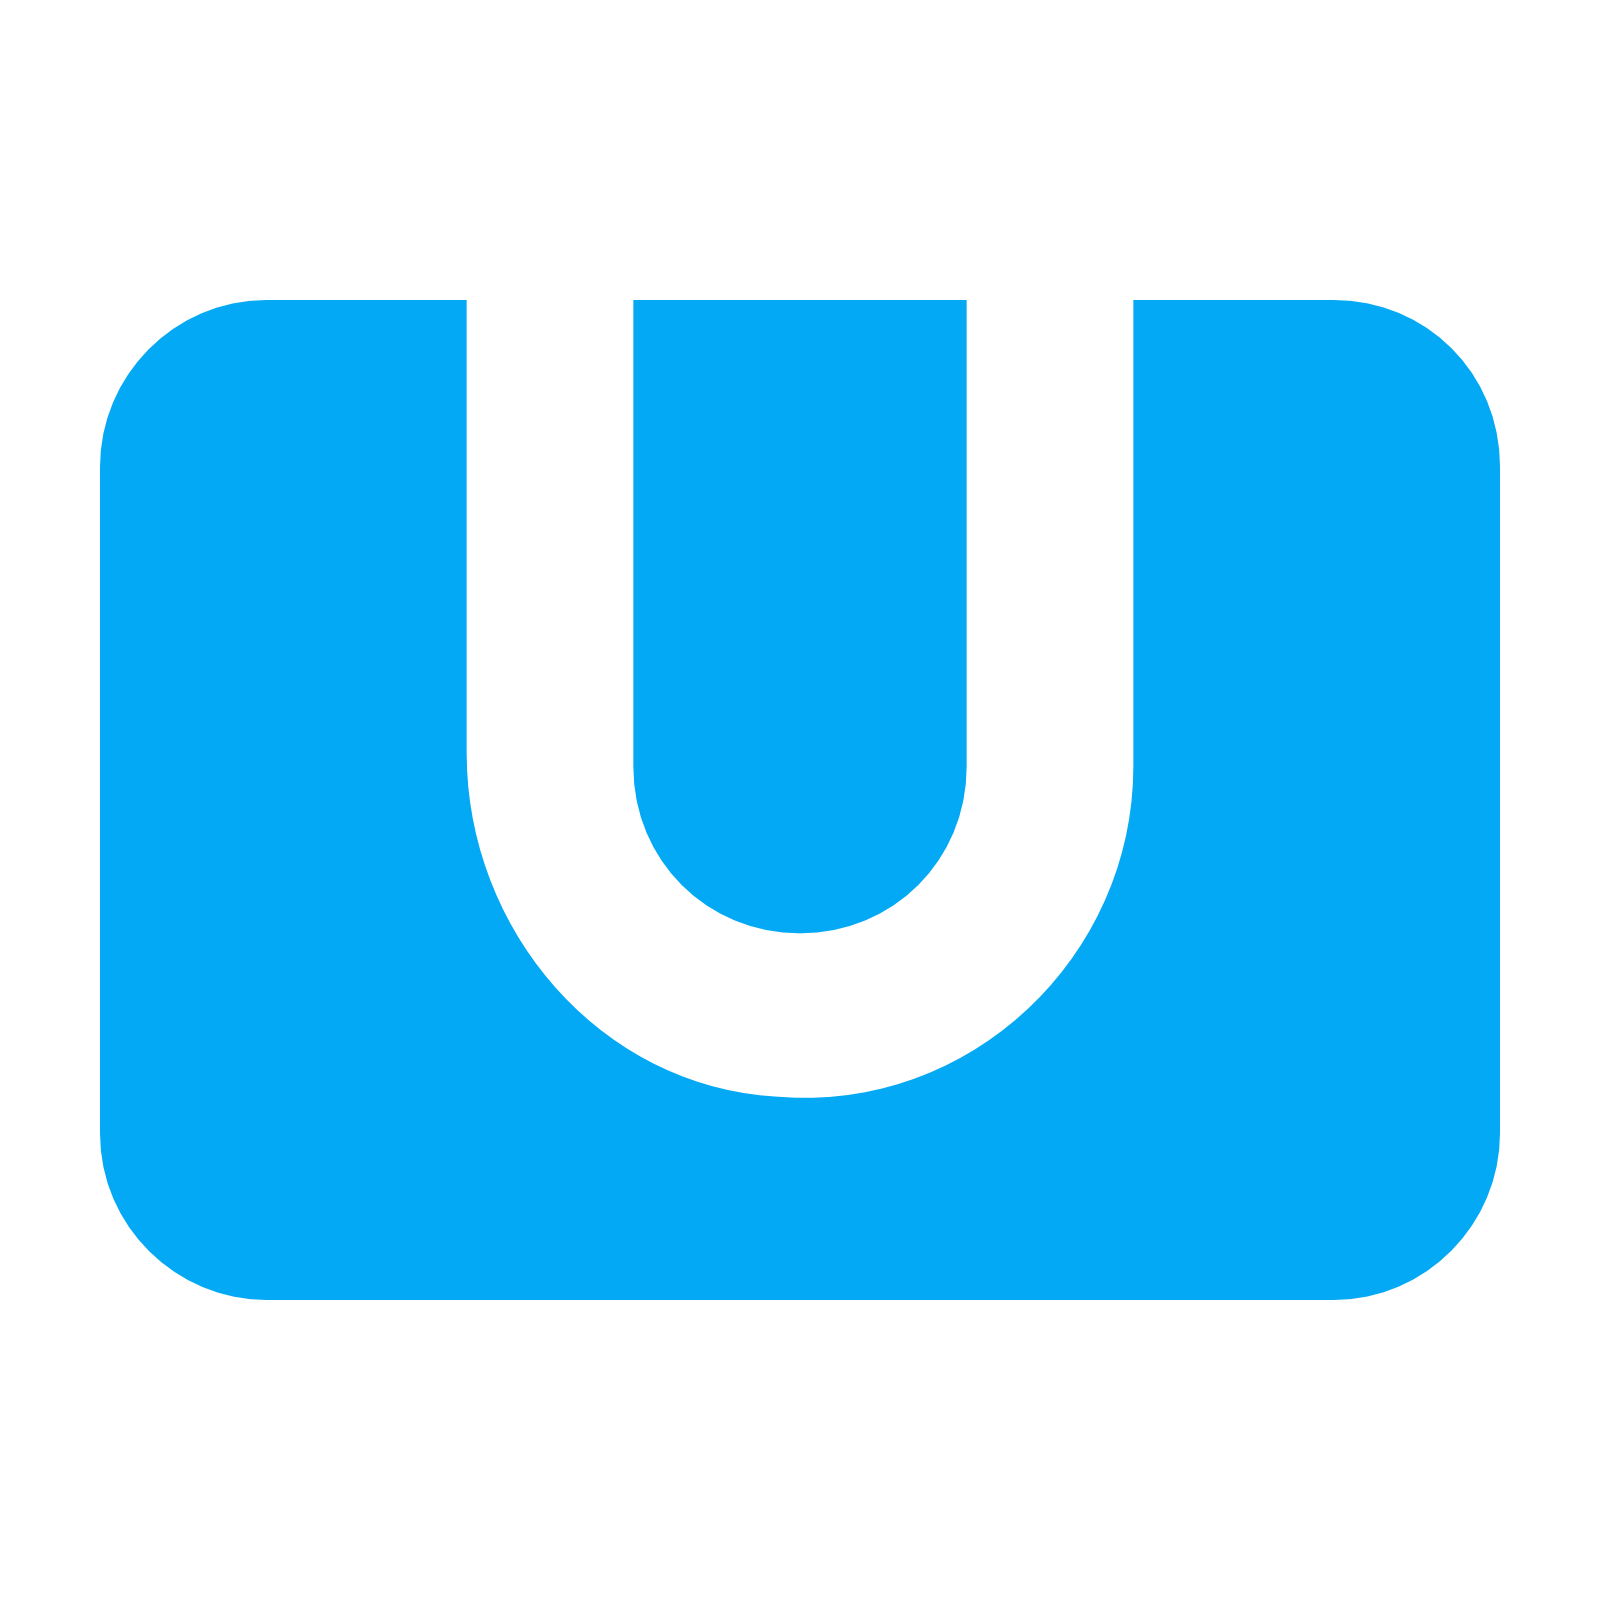 Wii U Desktop Icon Free Icons Library